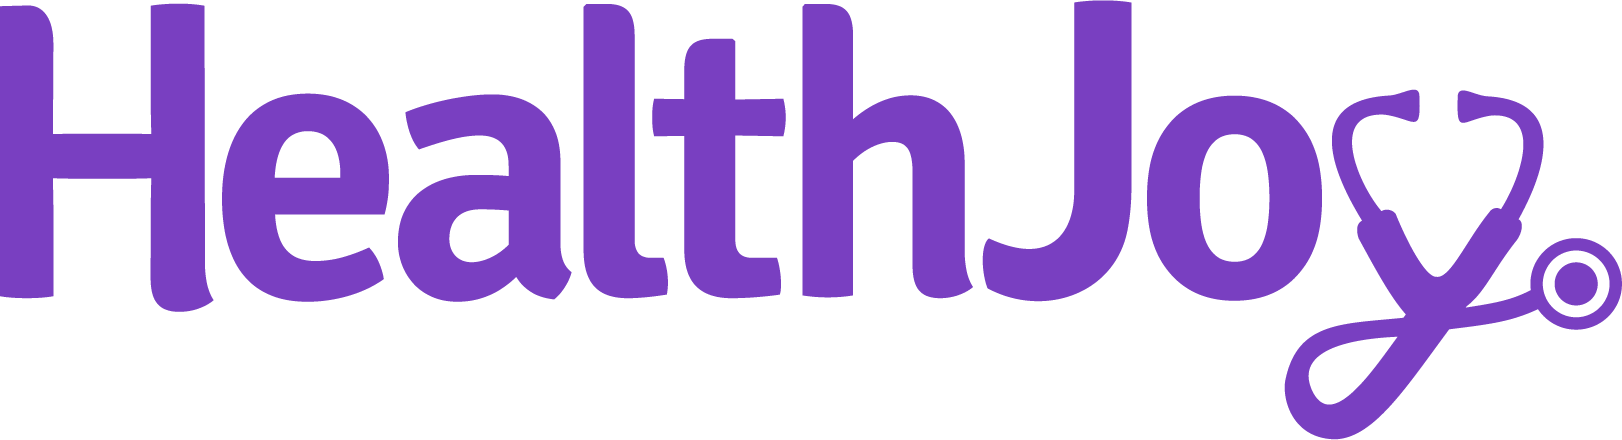 HealthJoy-Logo-Purple